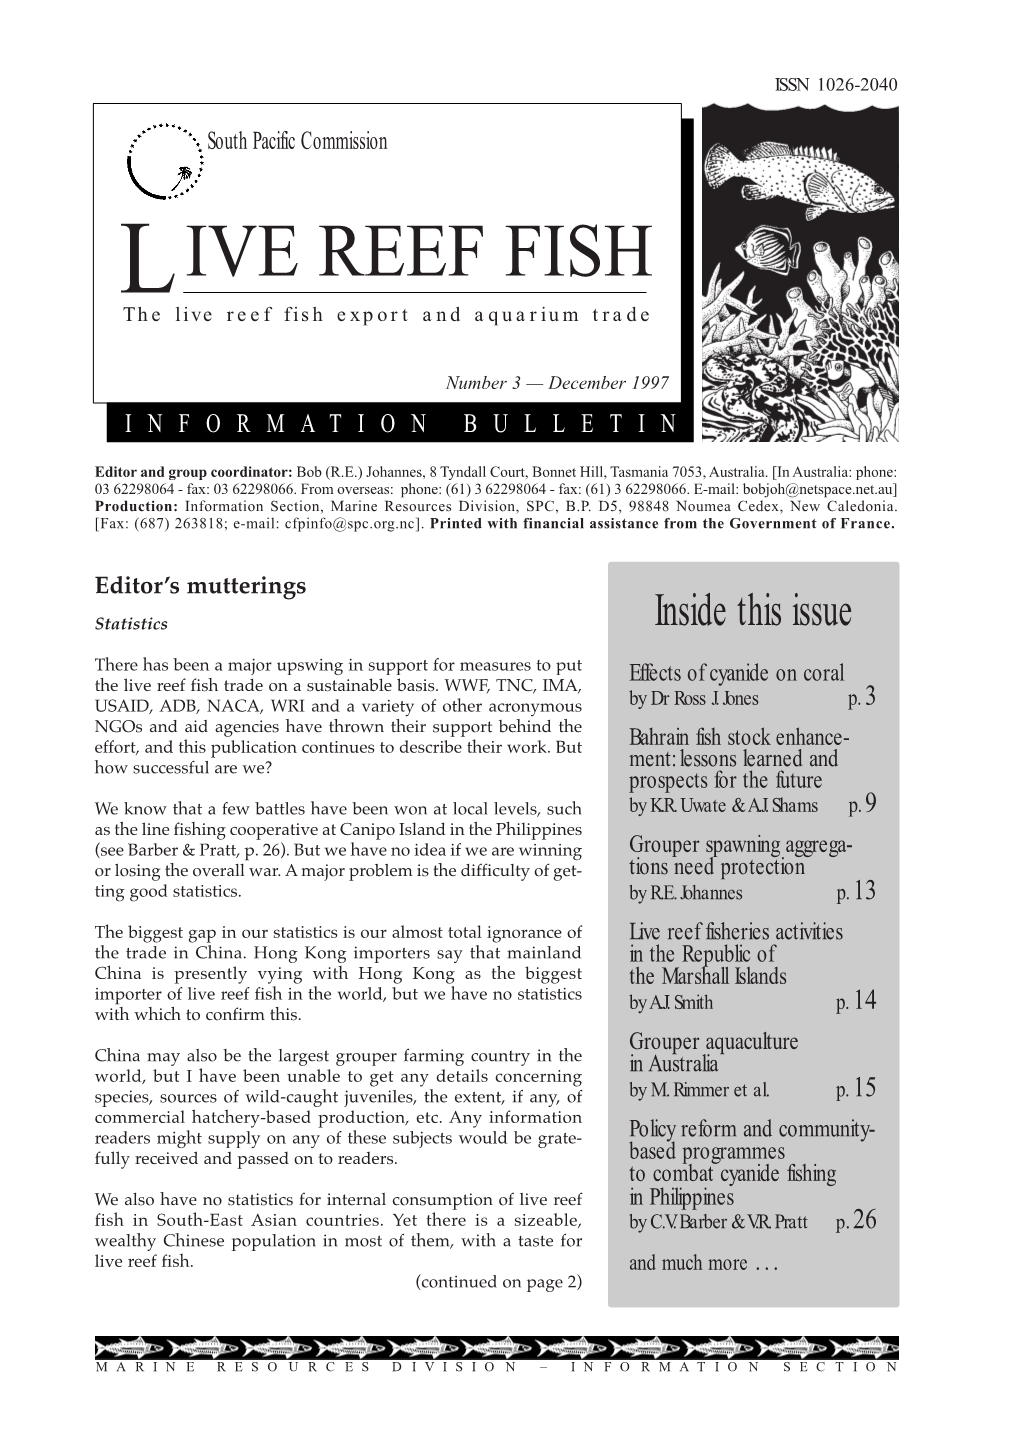 LIVE REEF FISH the Live Reef Fish Export and Aquarium Trade